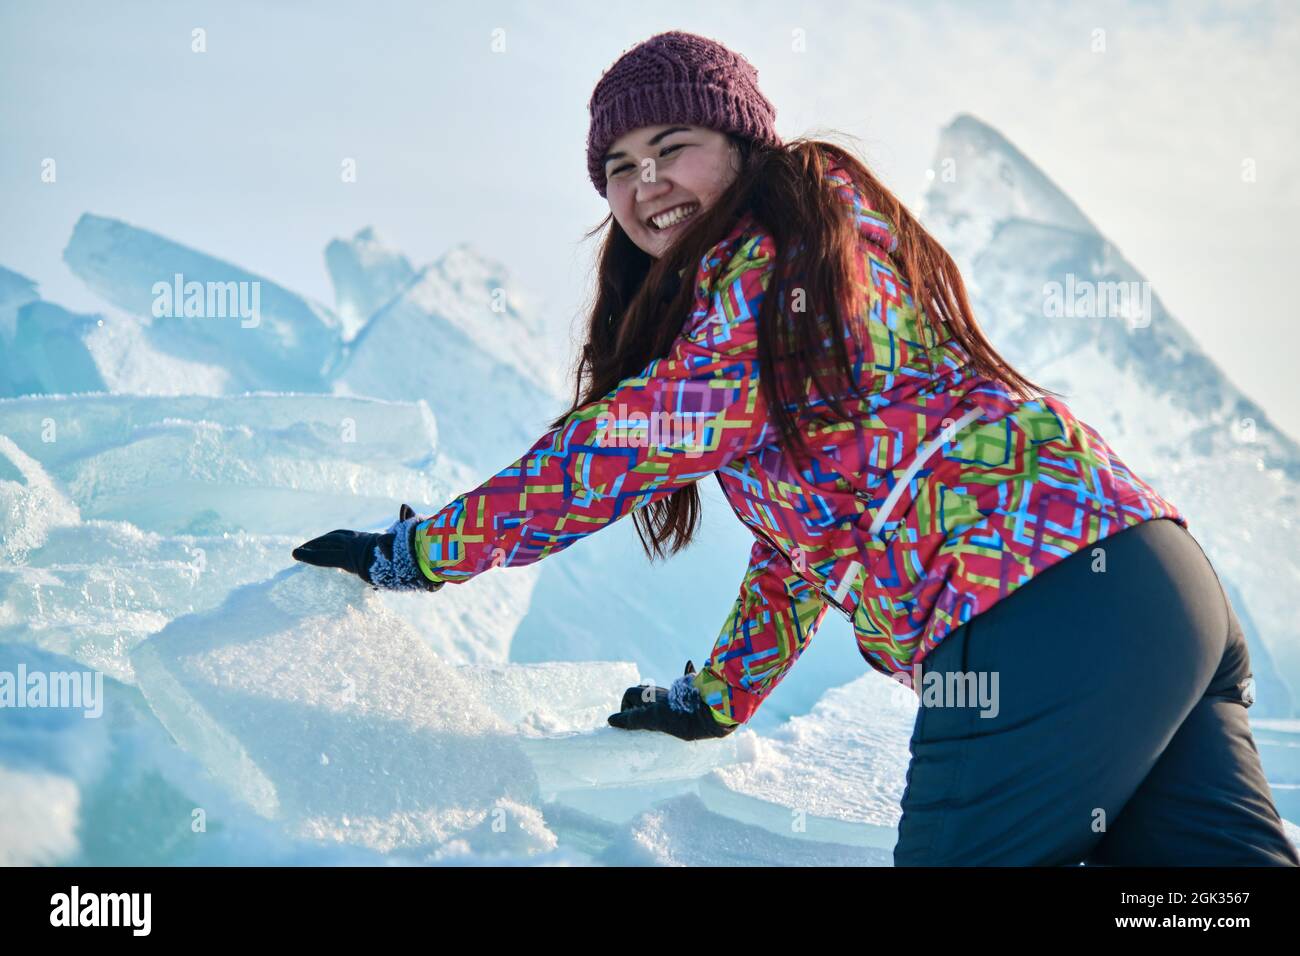 A woman in a ski suit climbs on blocks of ice, fun, fun, rest, winter Stock Photo